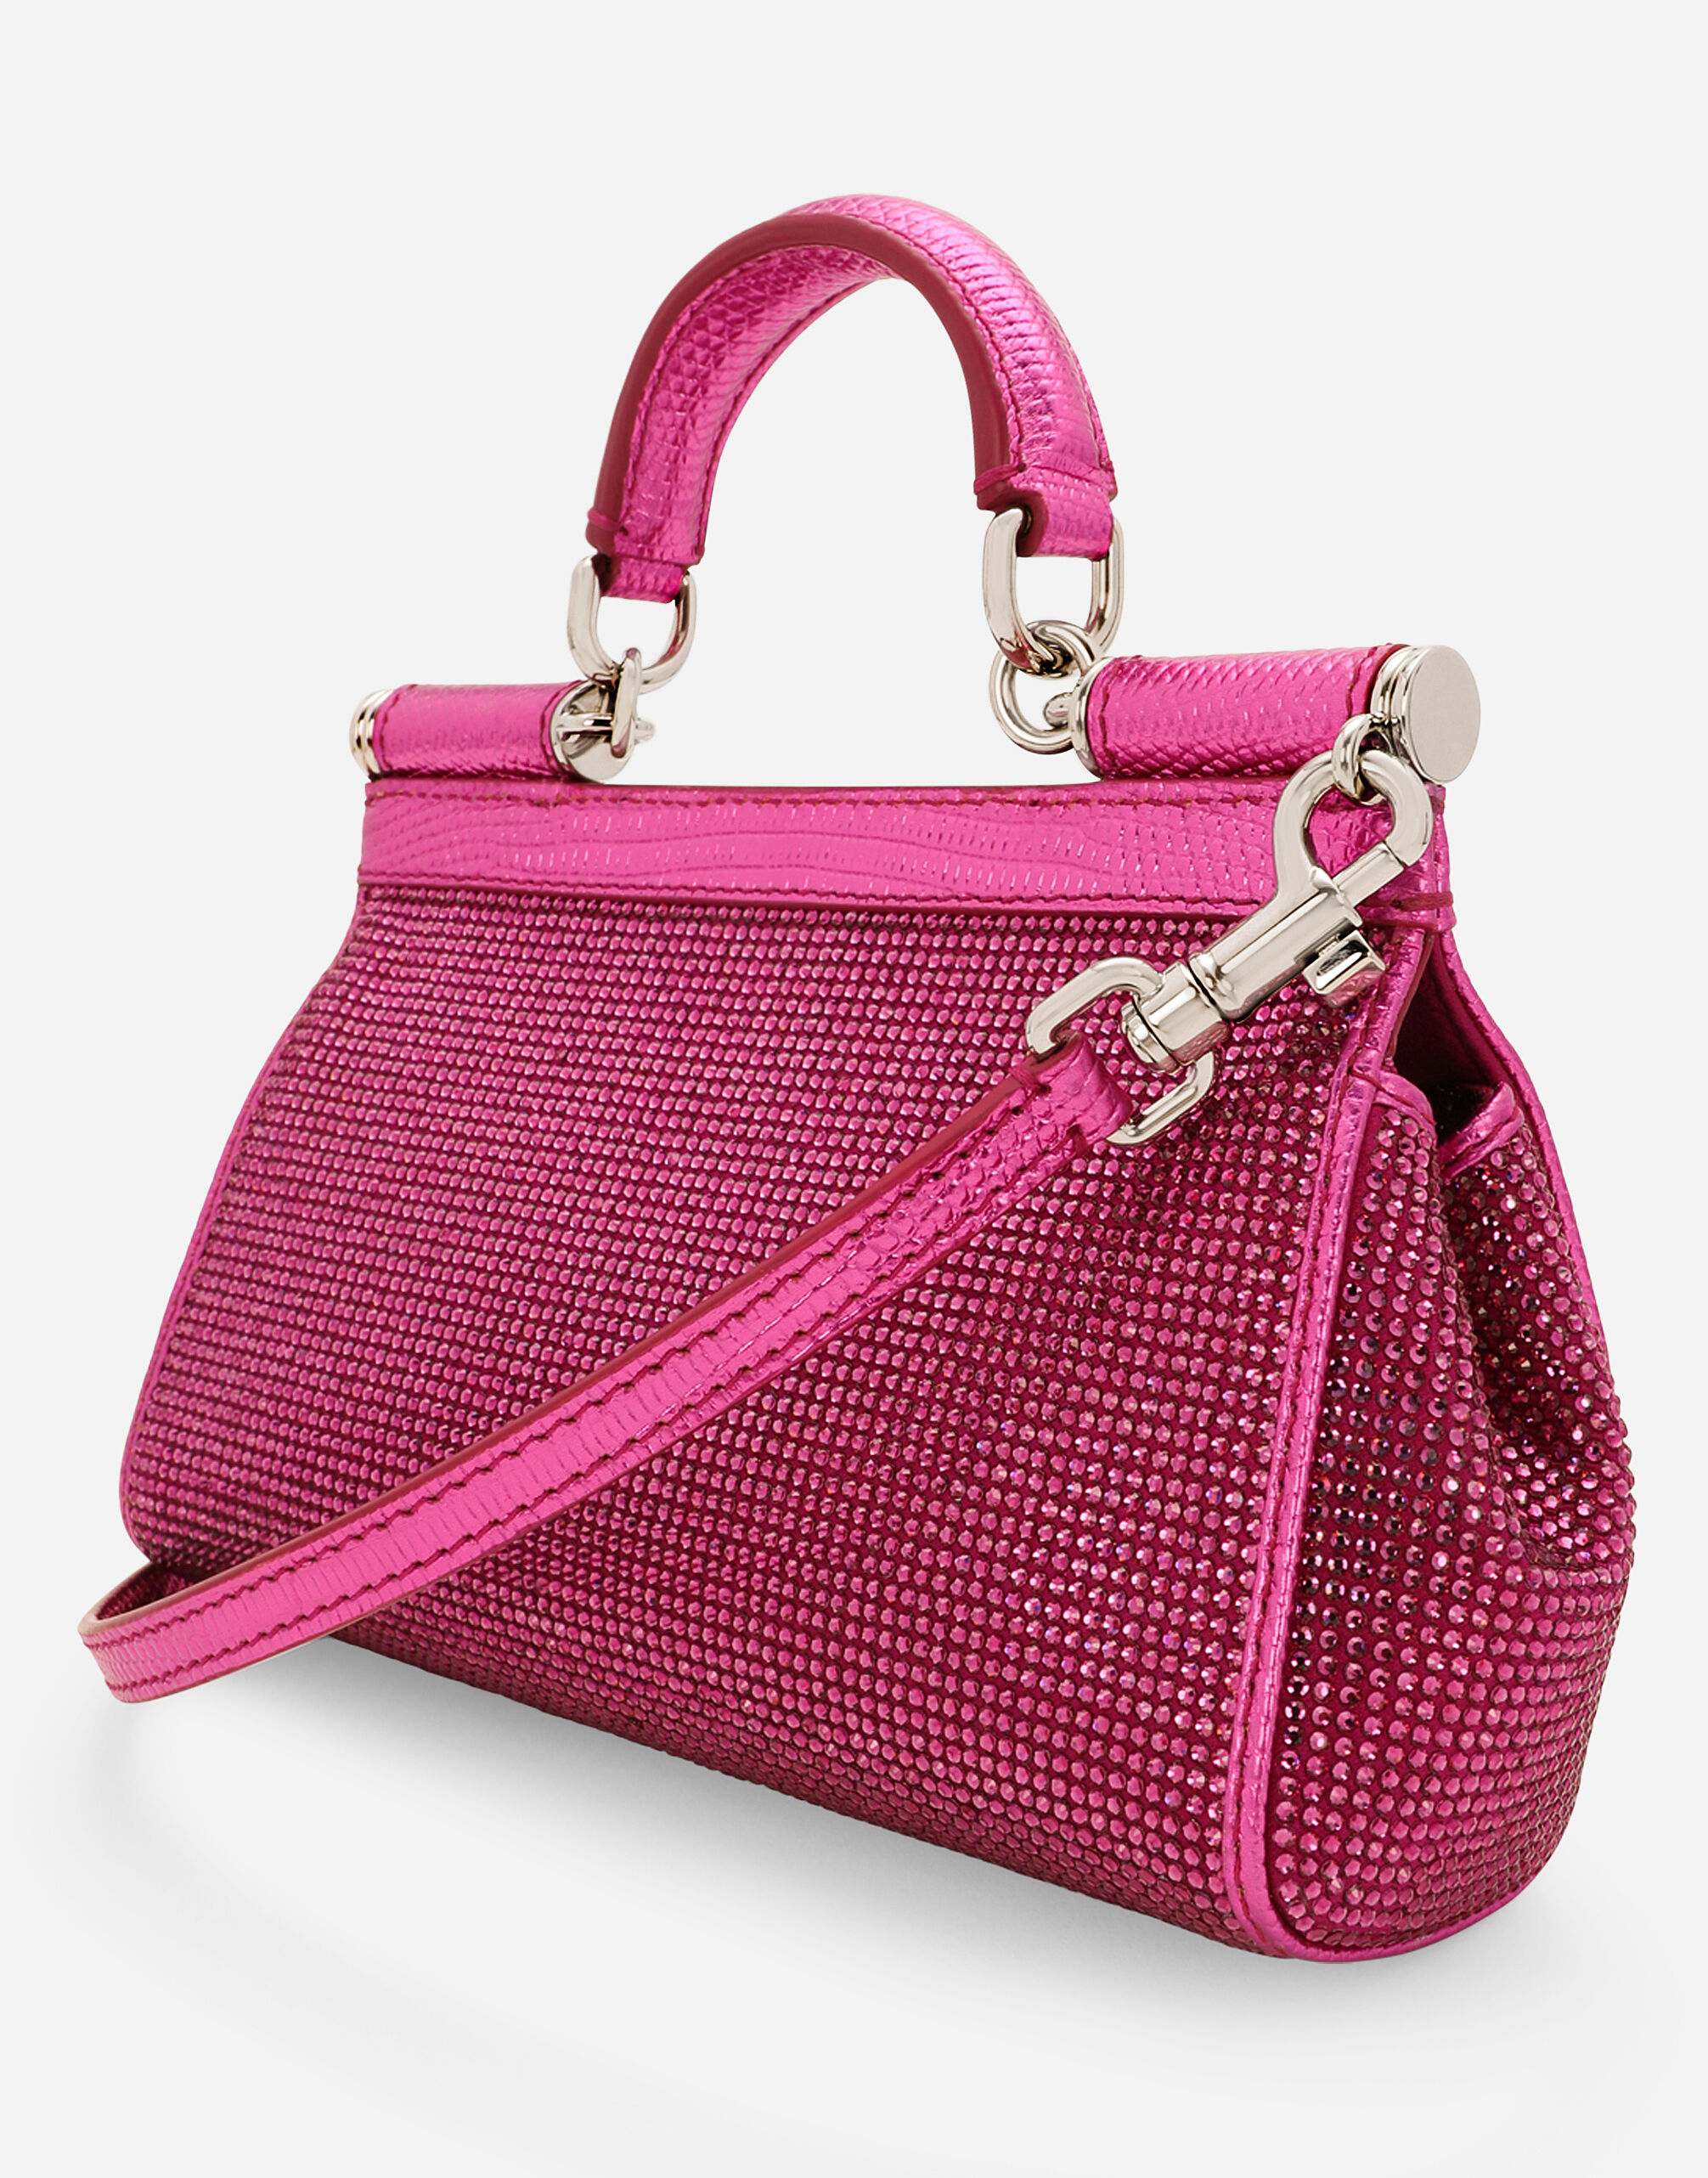 Small Sicily handbag in Fuchsia for Women | Dolce&Gabbana®